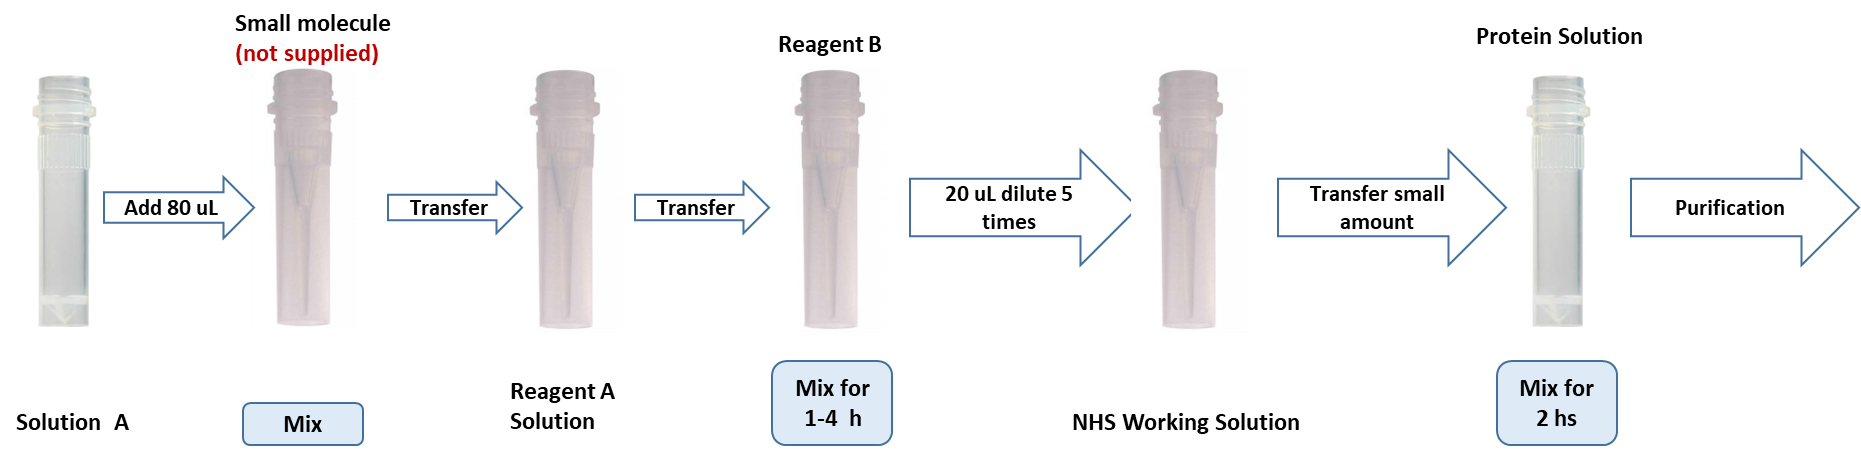 Reaction Scheme/workflow diagram for generating ova-small molecule acid conjugates using CM52419